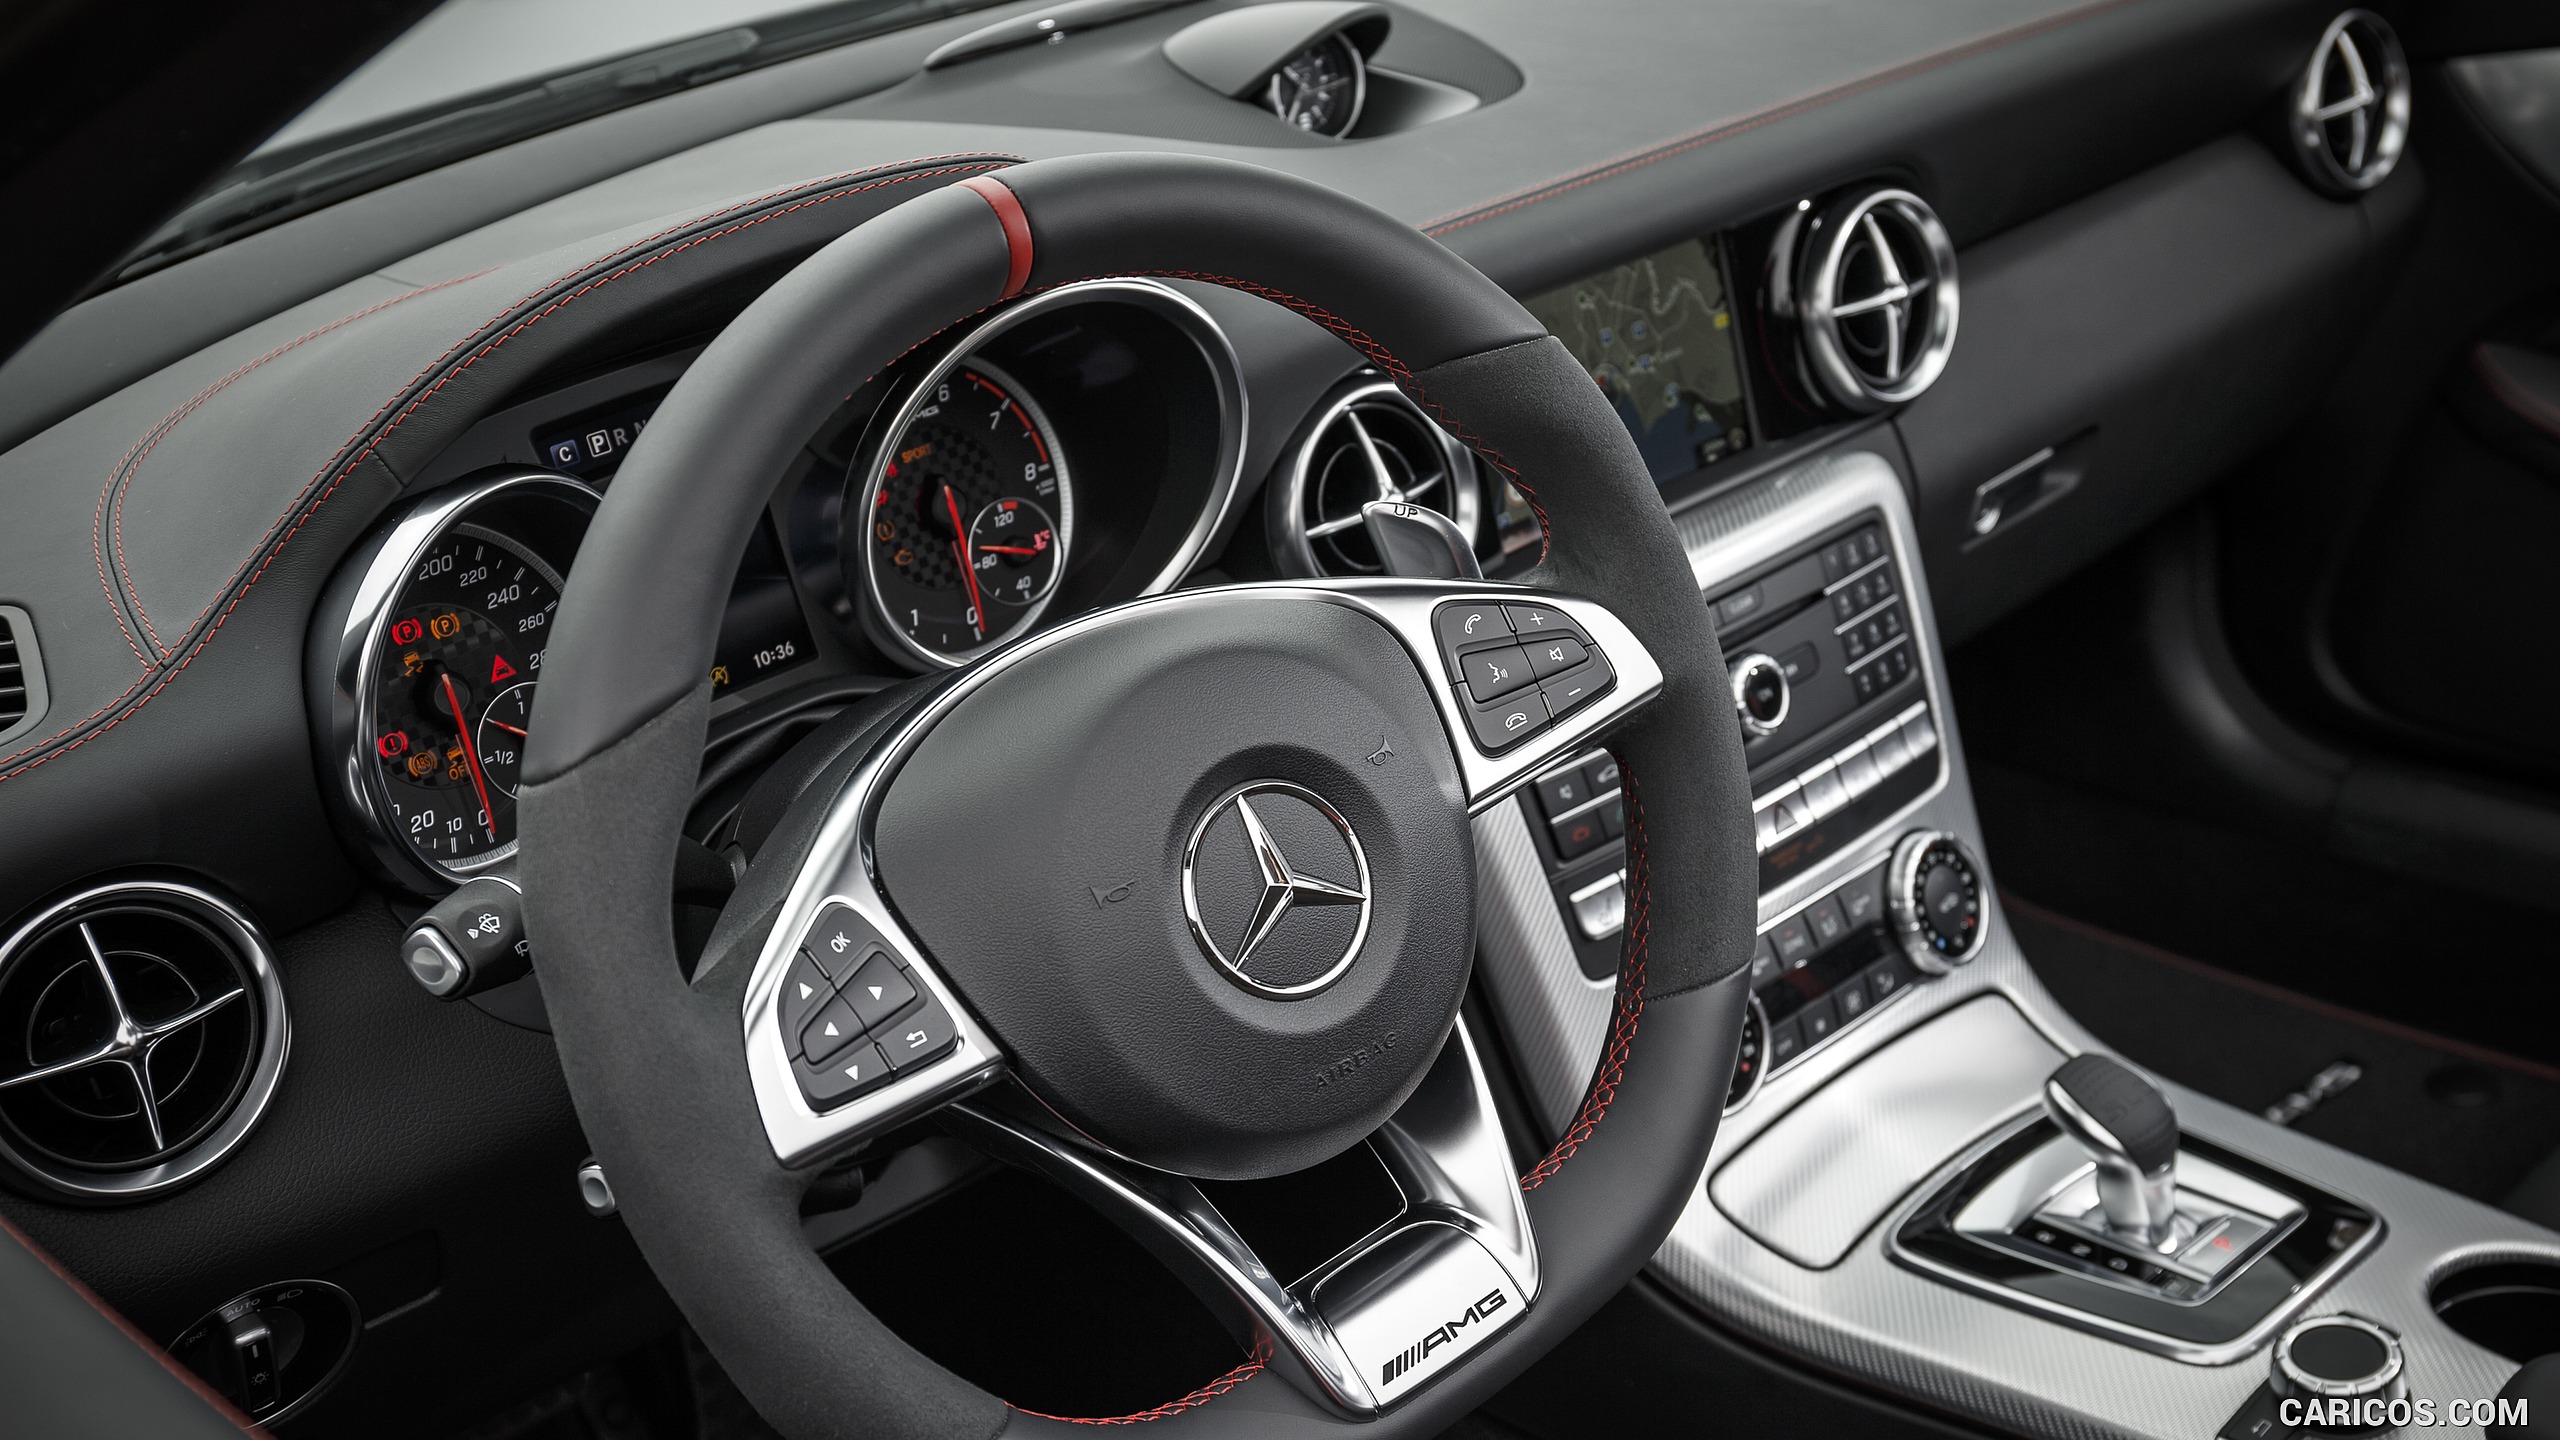 2017 Mercedes-AMG SLC 43 - Interior, Steering Wheel, #69 of 92